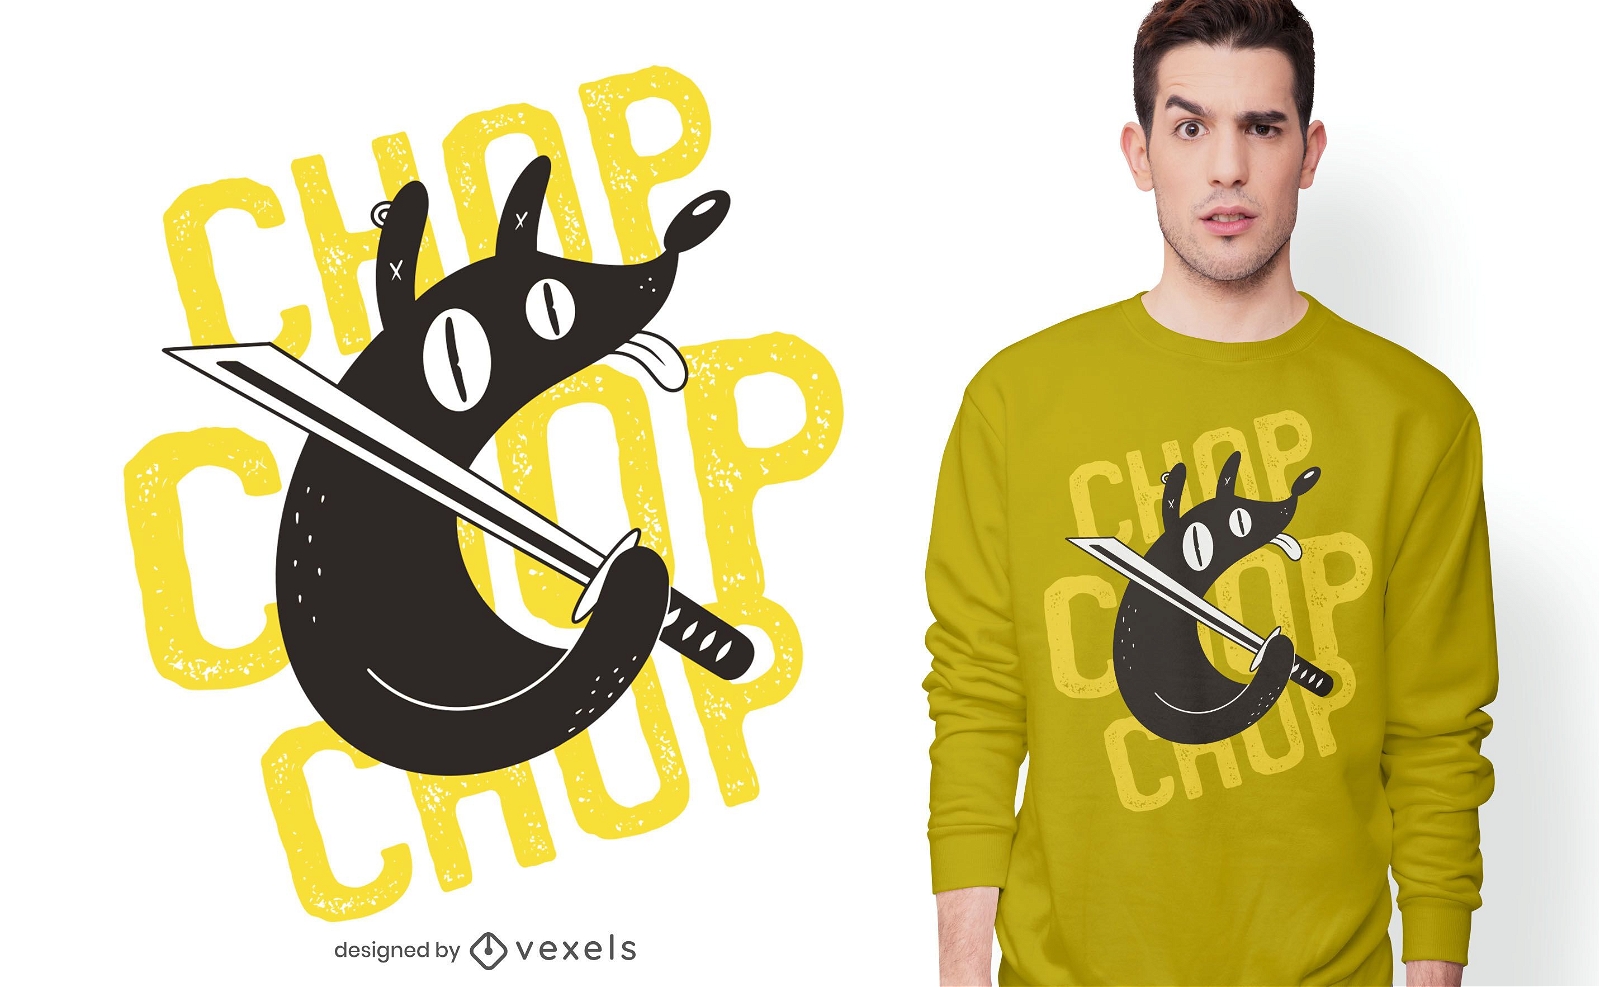 Chop dog t-shirt design